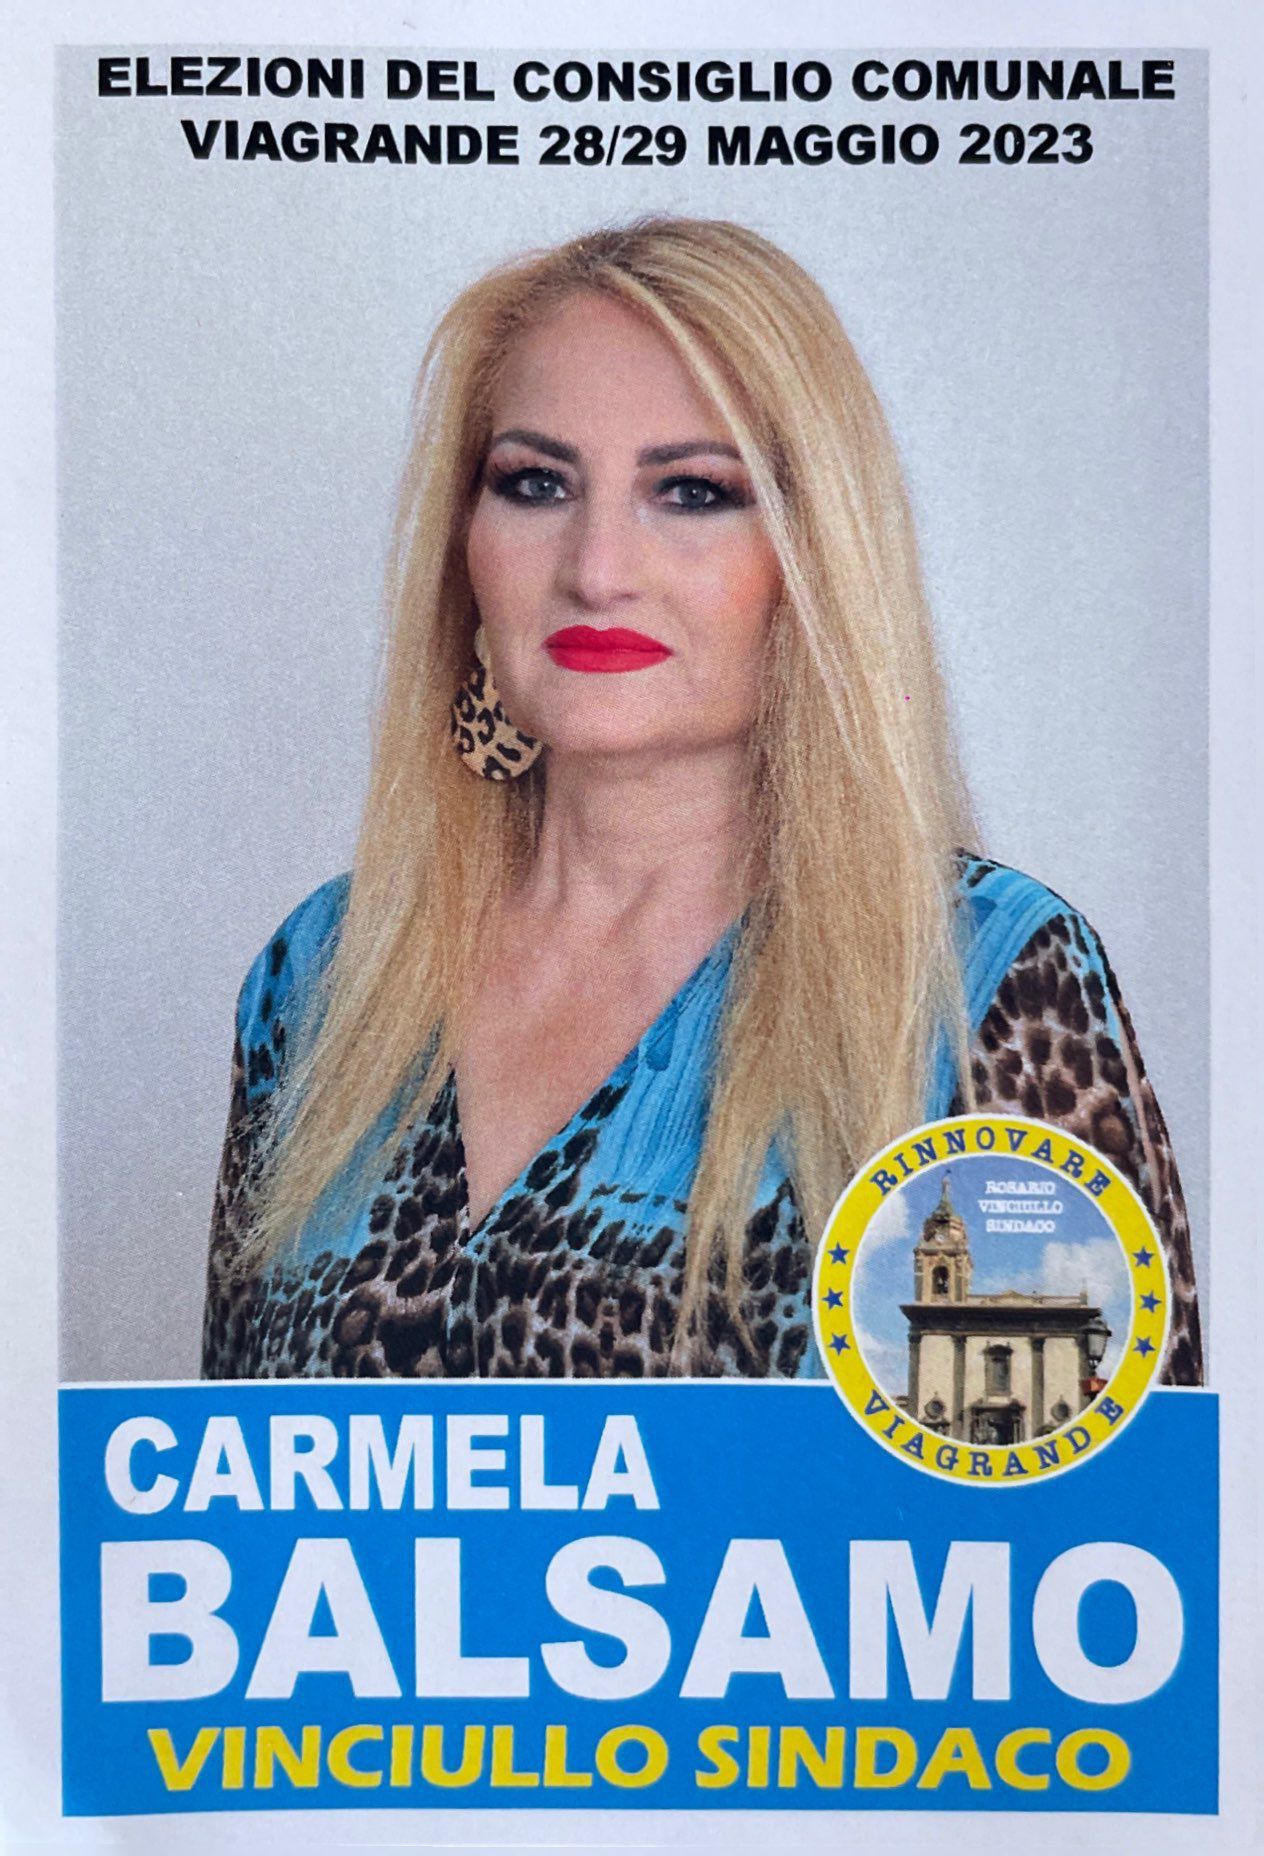 Carmela Balsamo